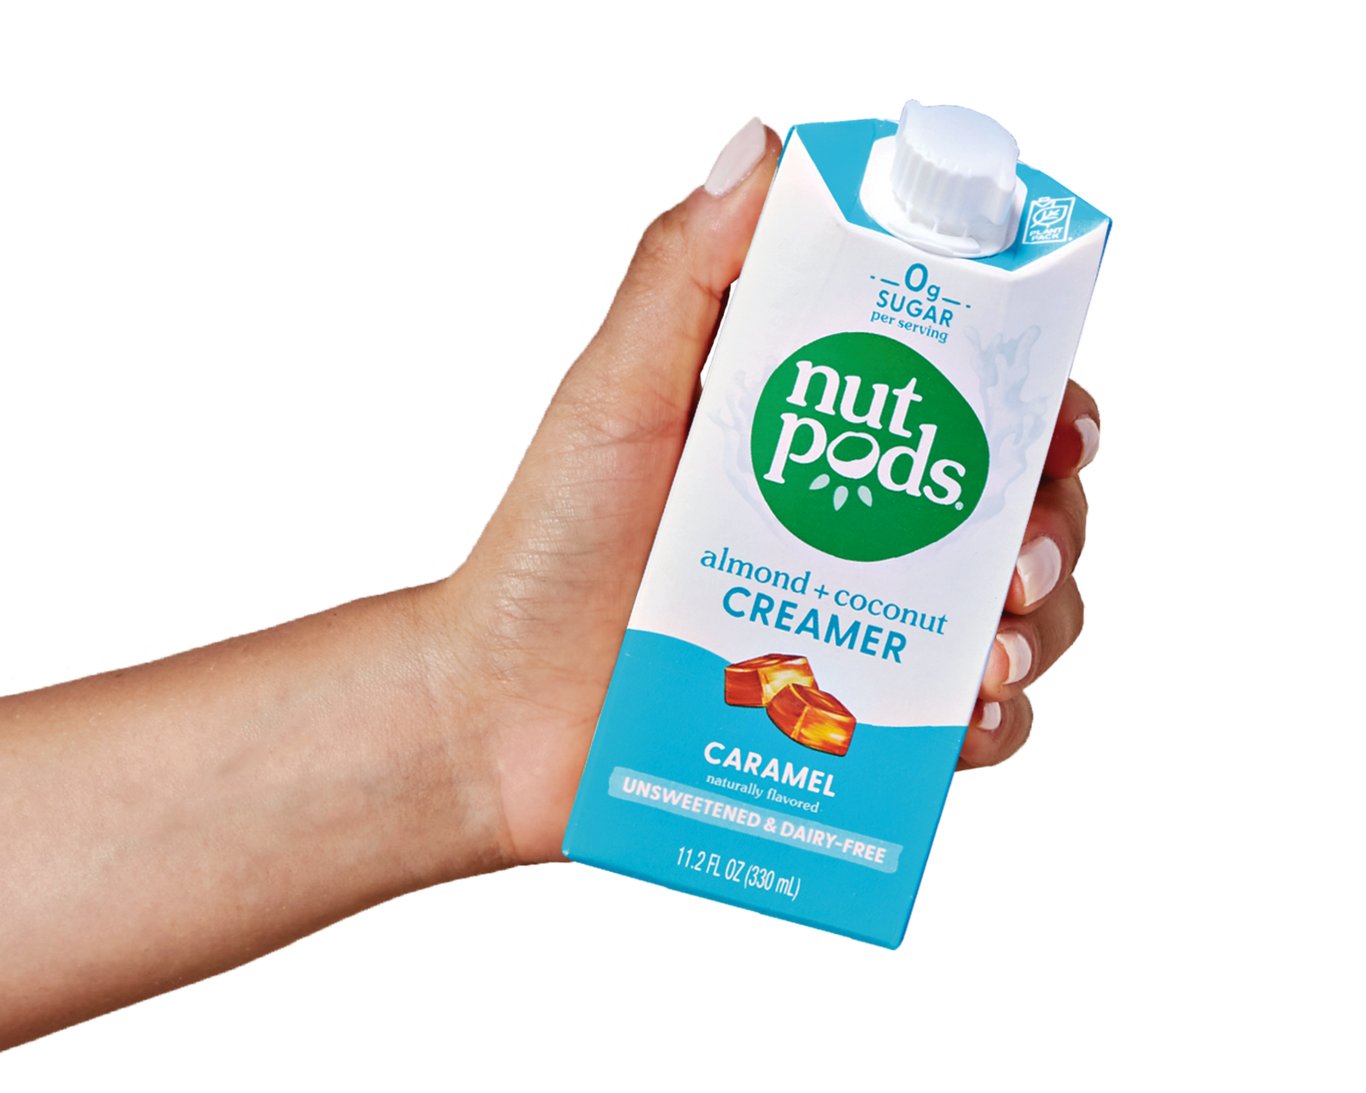 Nutpods Almond + Coconut Creamer